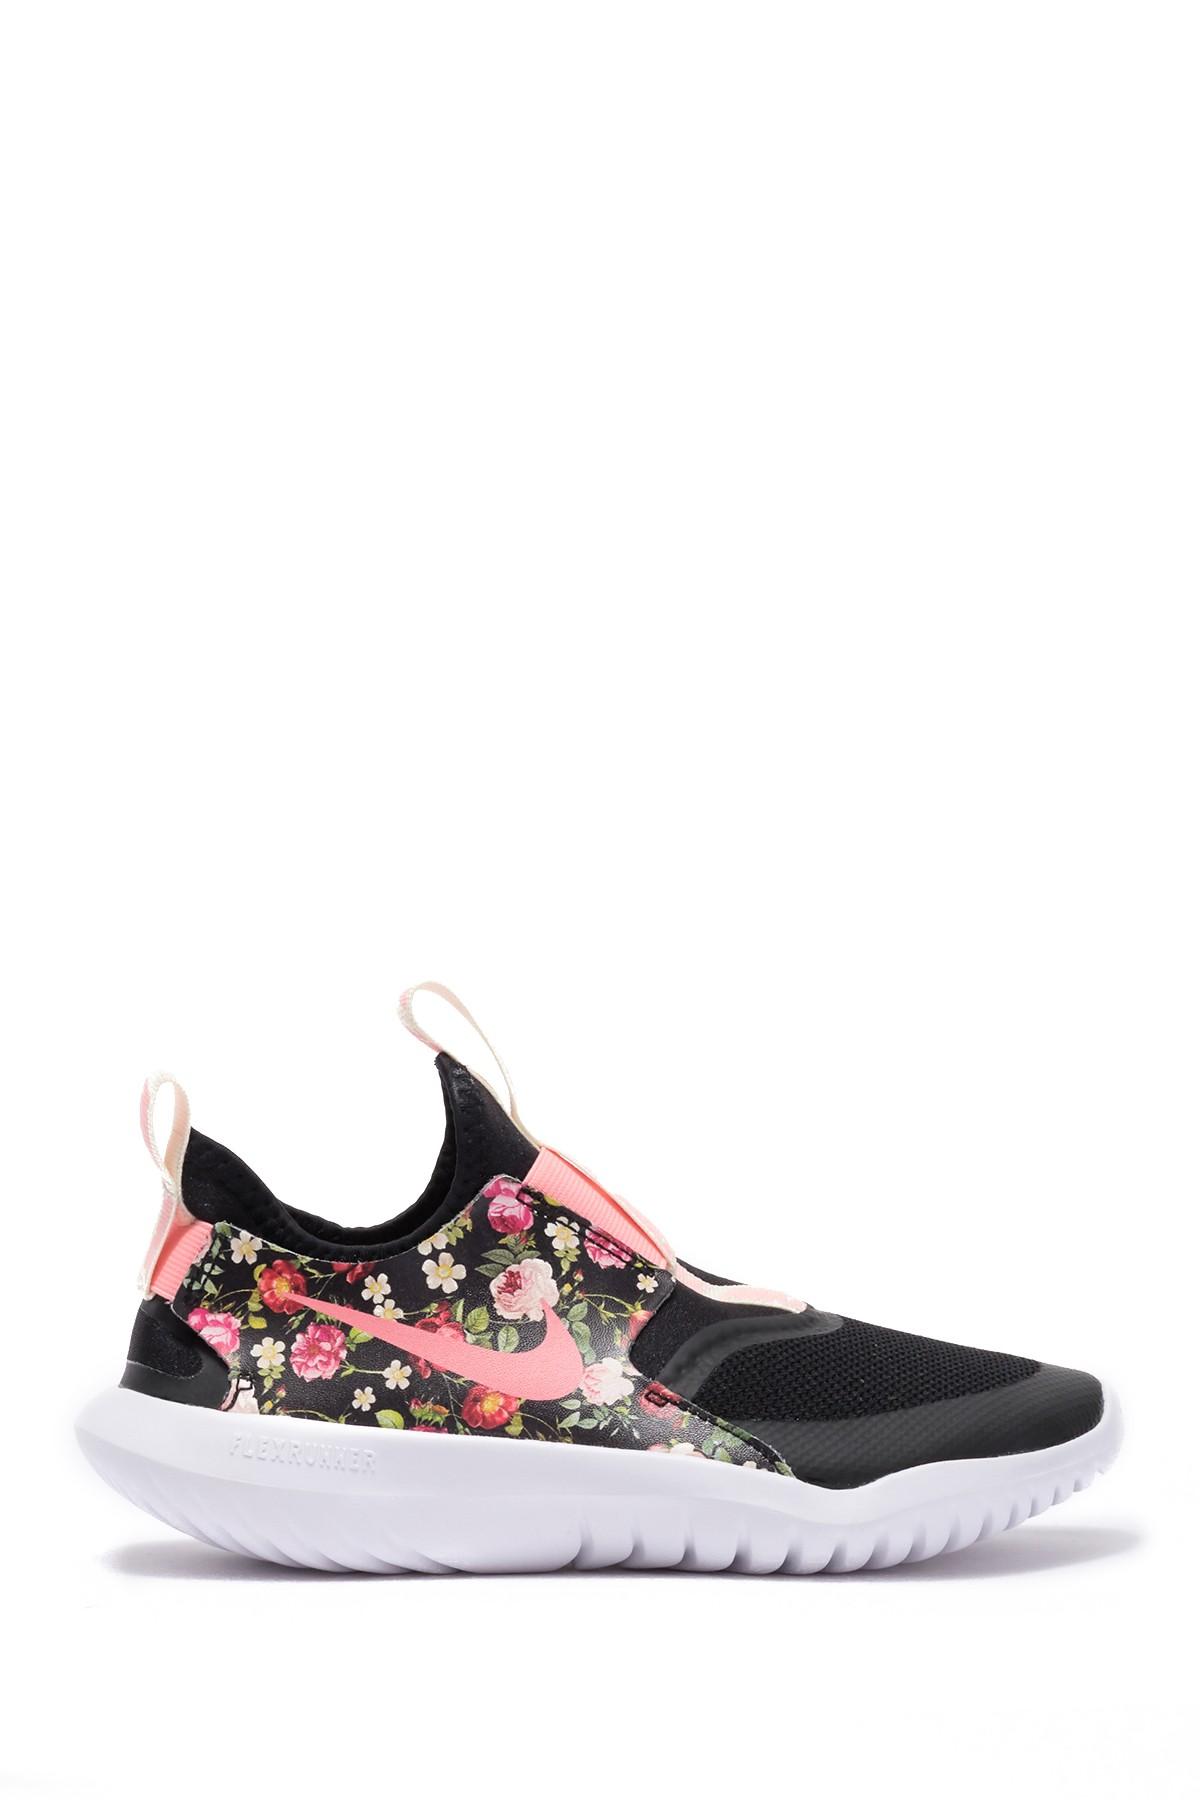 Nike Flex Runner Vintage Floral Trail Running Shoes in Black | Lyst